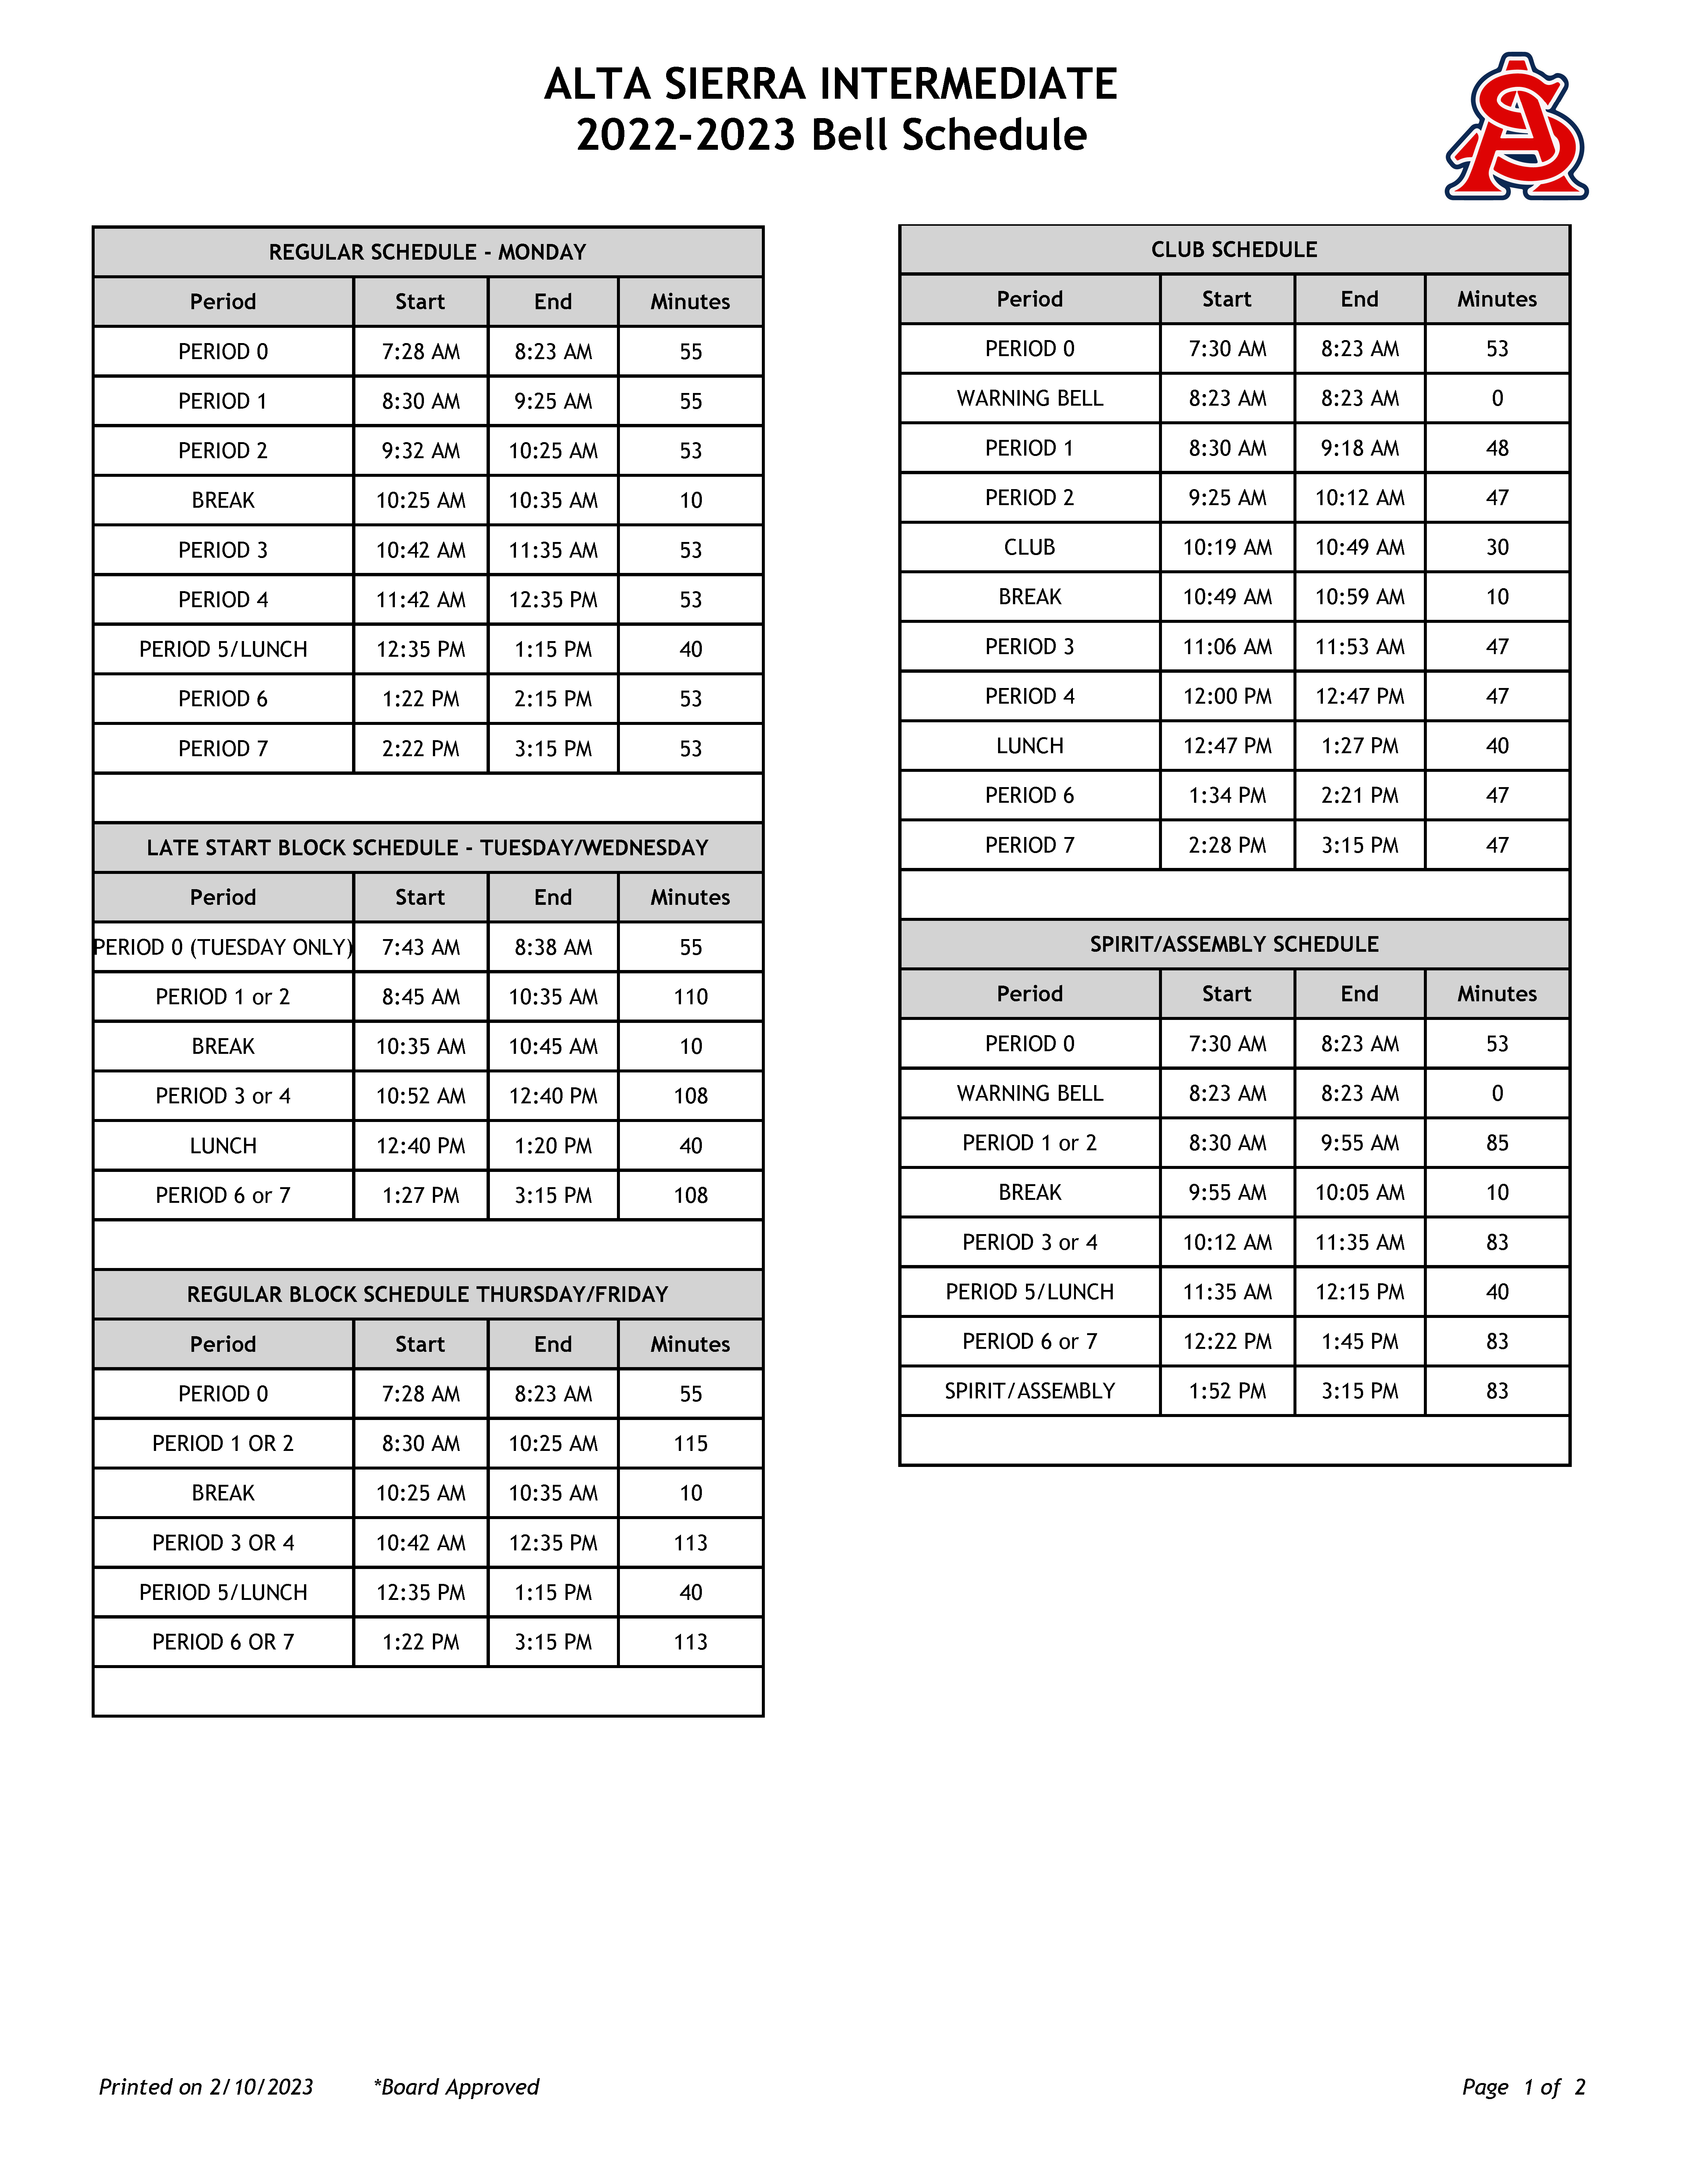 22-23 ASI Bell Schedule